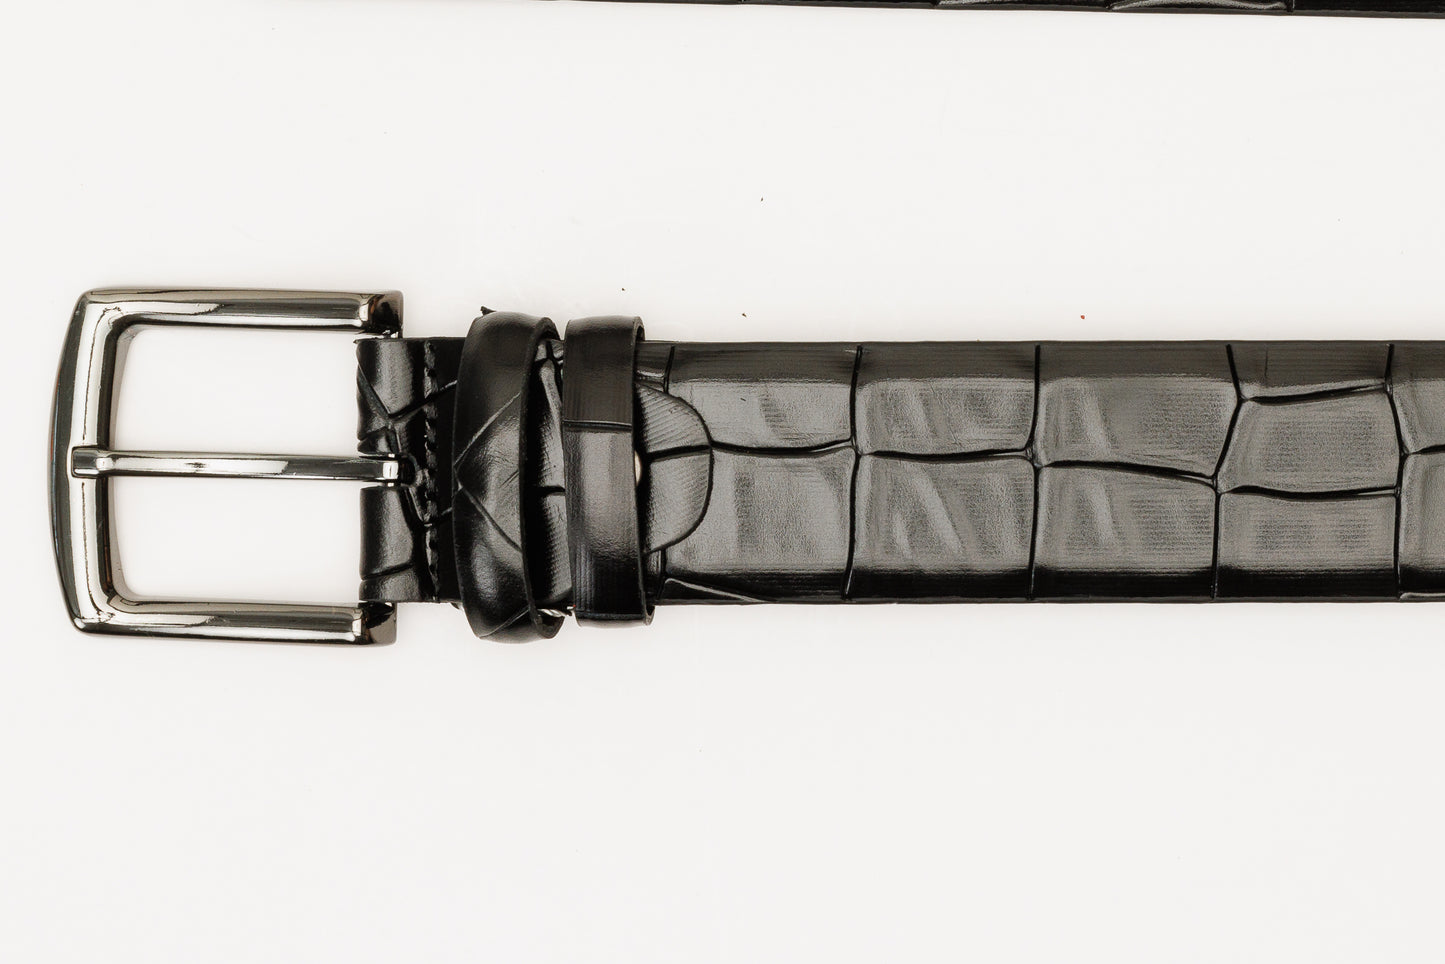 The Patton Black Color Calfskin Belt